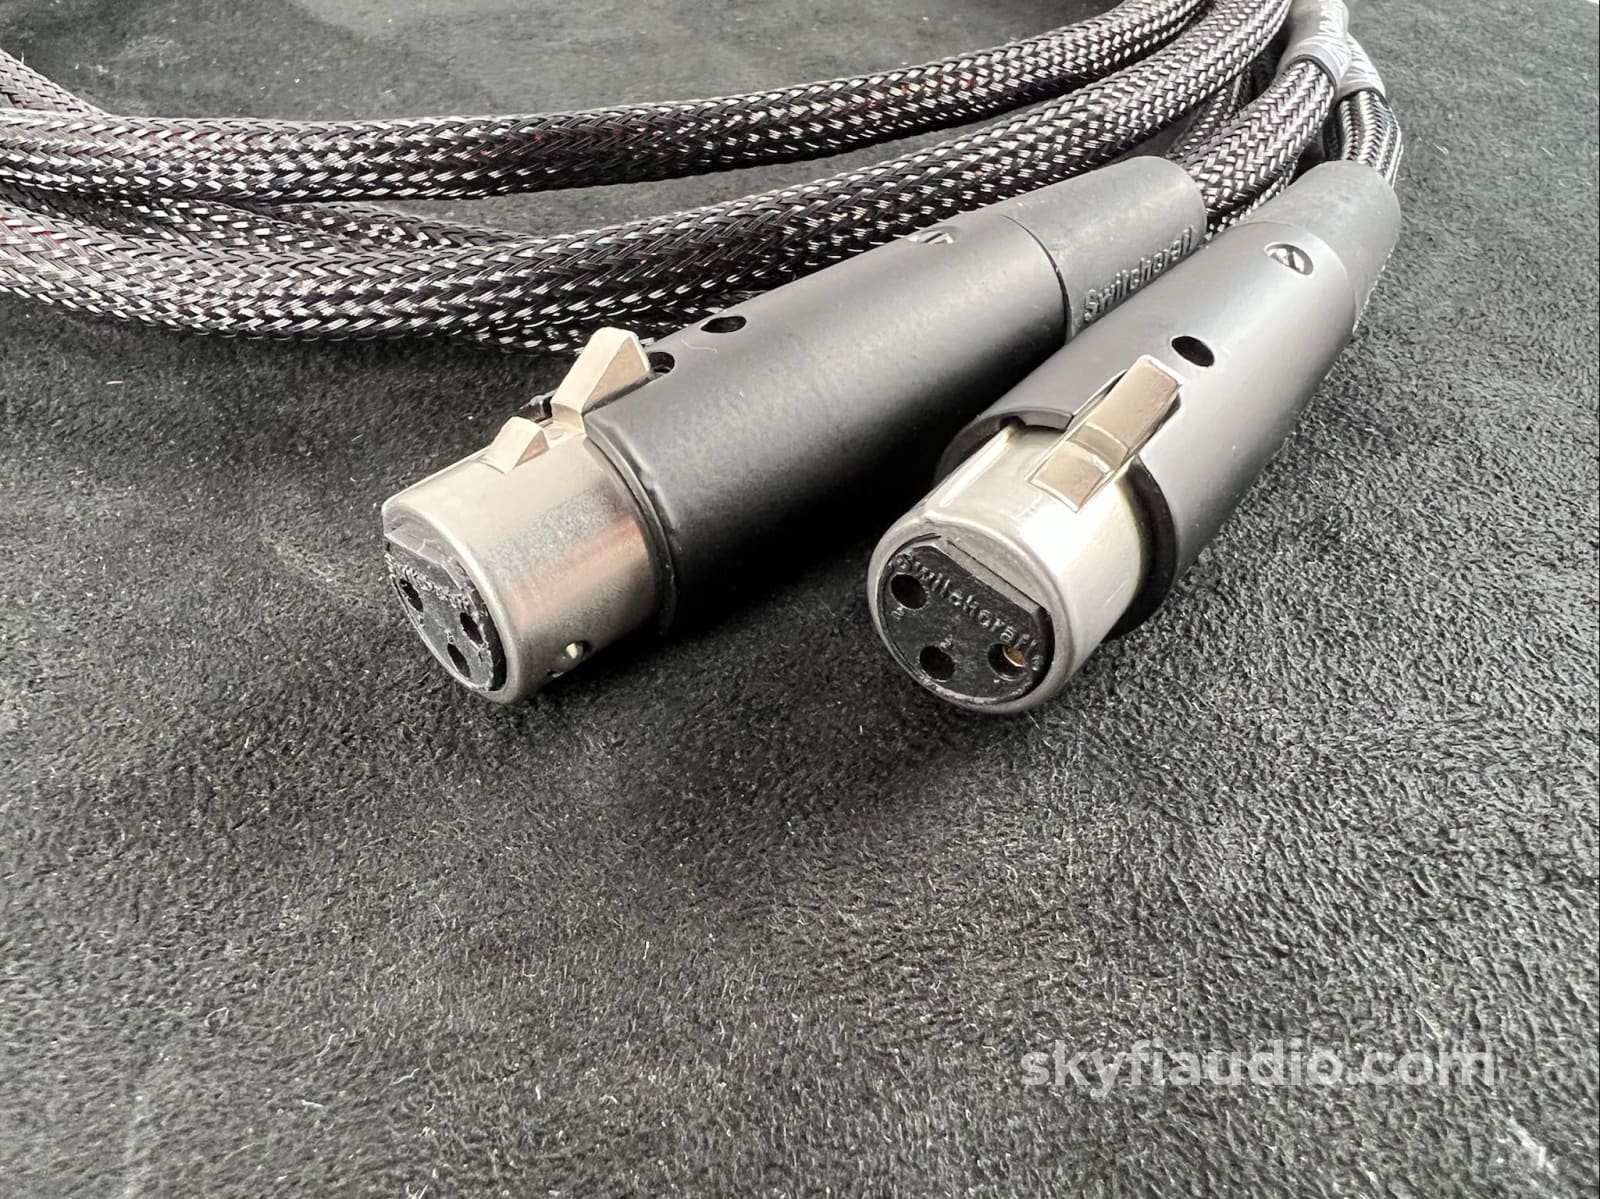 Kimber Kable Hero Interconnects (Pair) - Balanced Xlr Connectors 1.5M Cables